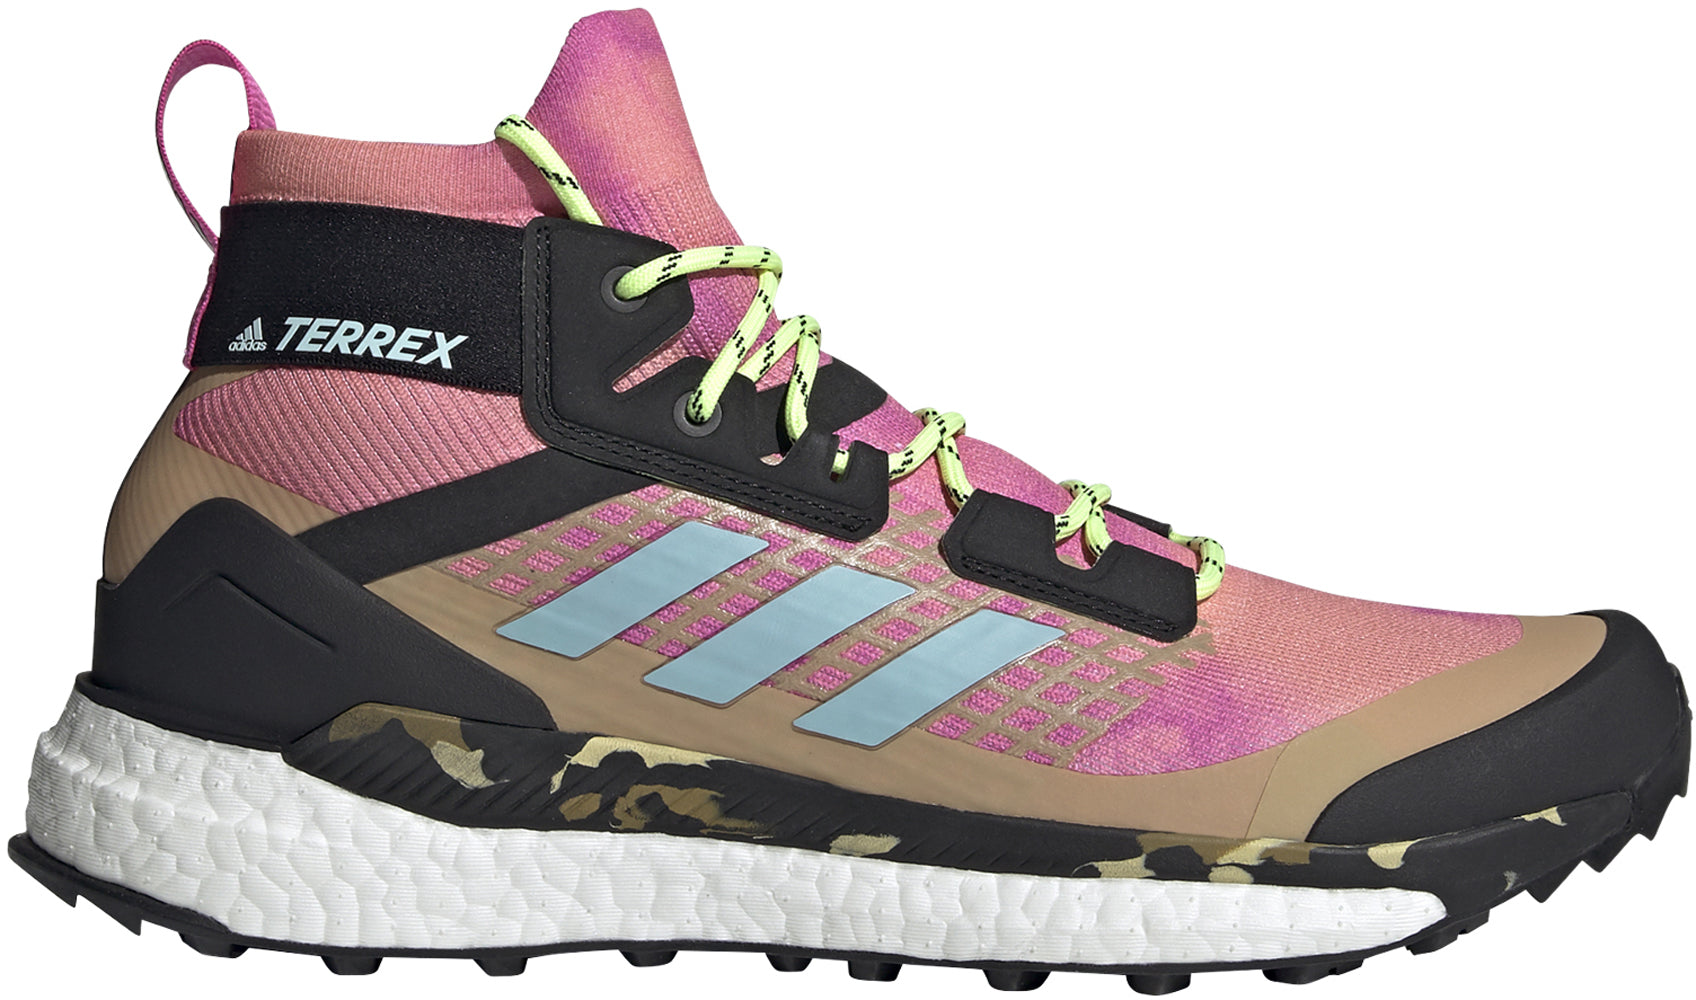 Men's adidas Terrex Free Hiker Primeblue Hiking Shoe in Hazy Orange/Hazy Sky/Screaming Pink from the side